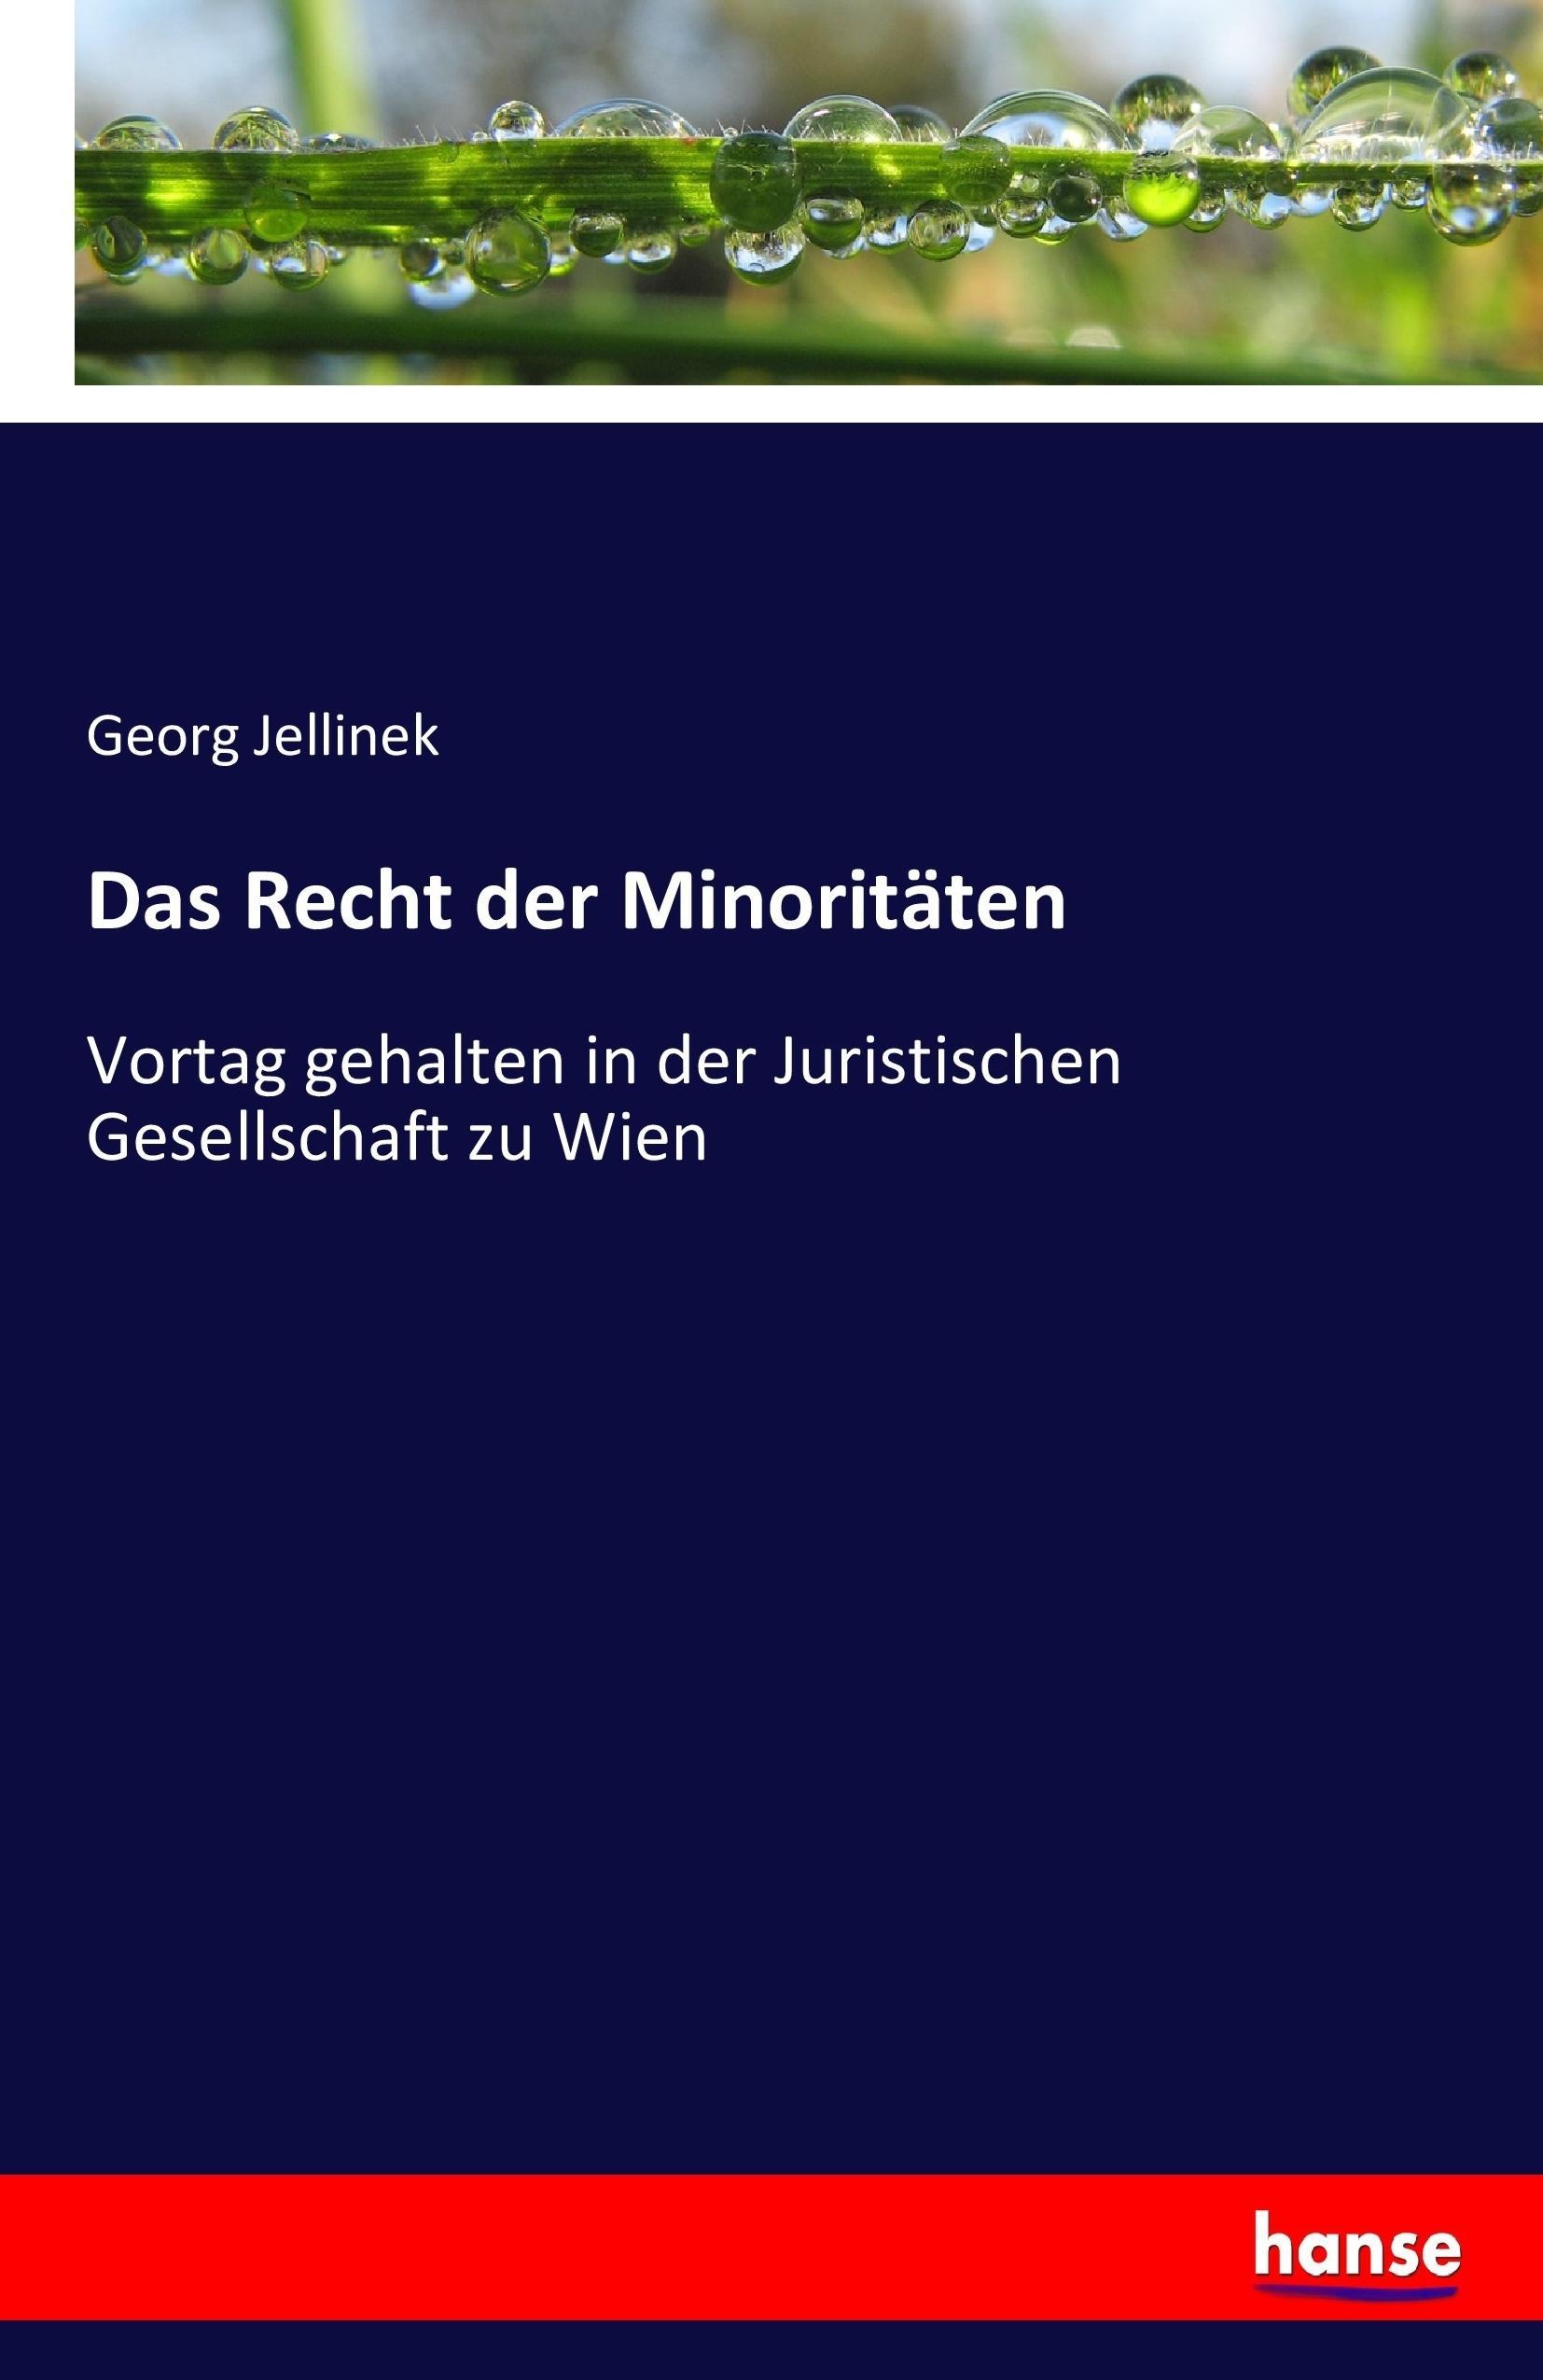 Das Recht der Minoritaeten - Jellinek, Georg